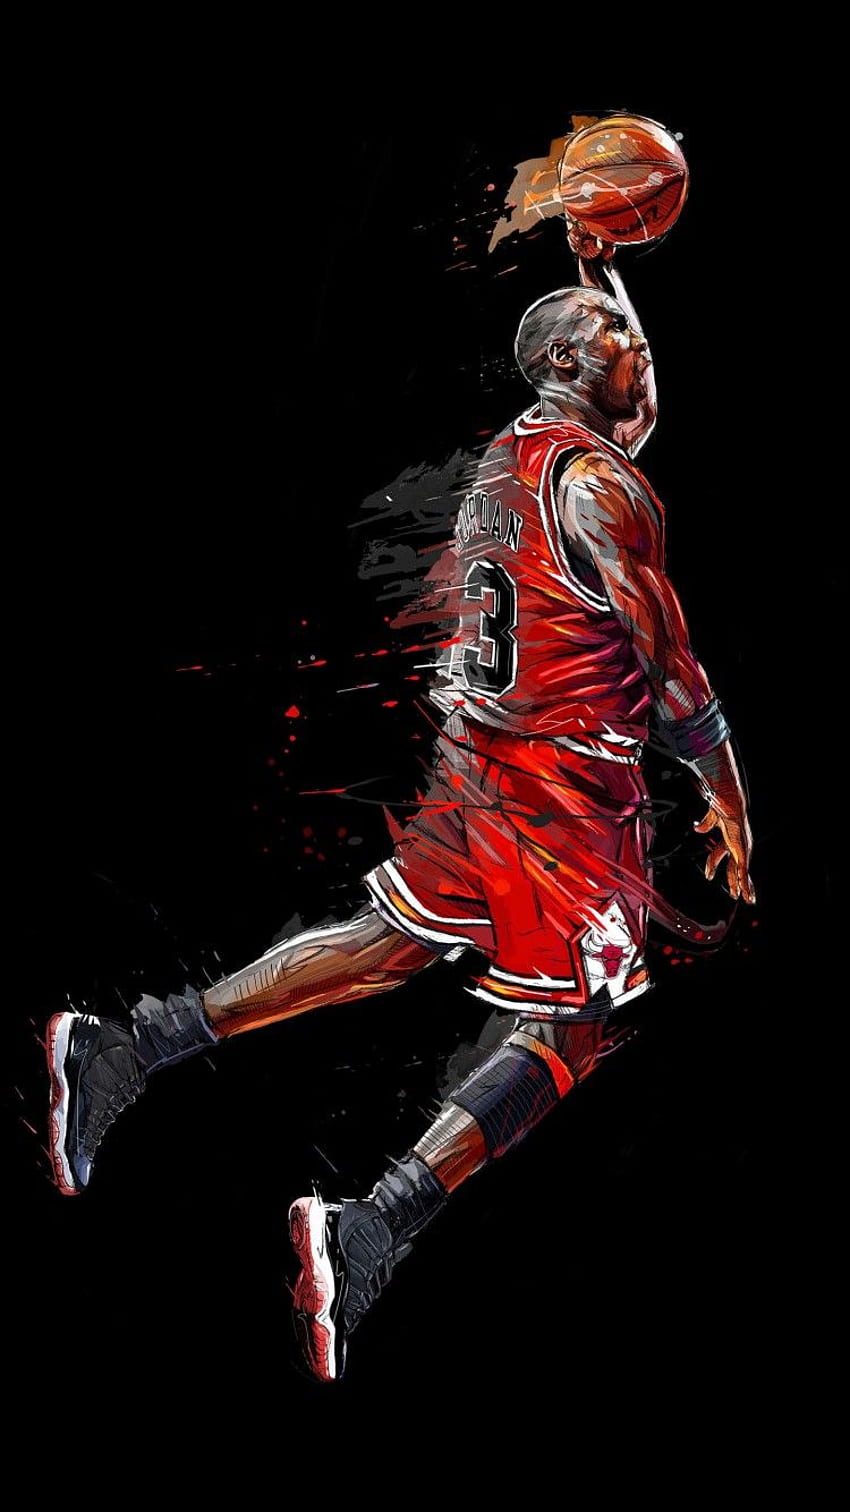 Jordan - arte do fã de Michael Jordan - e plano de fundo Papel de parede de celular HD